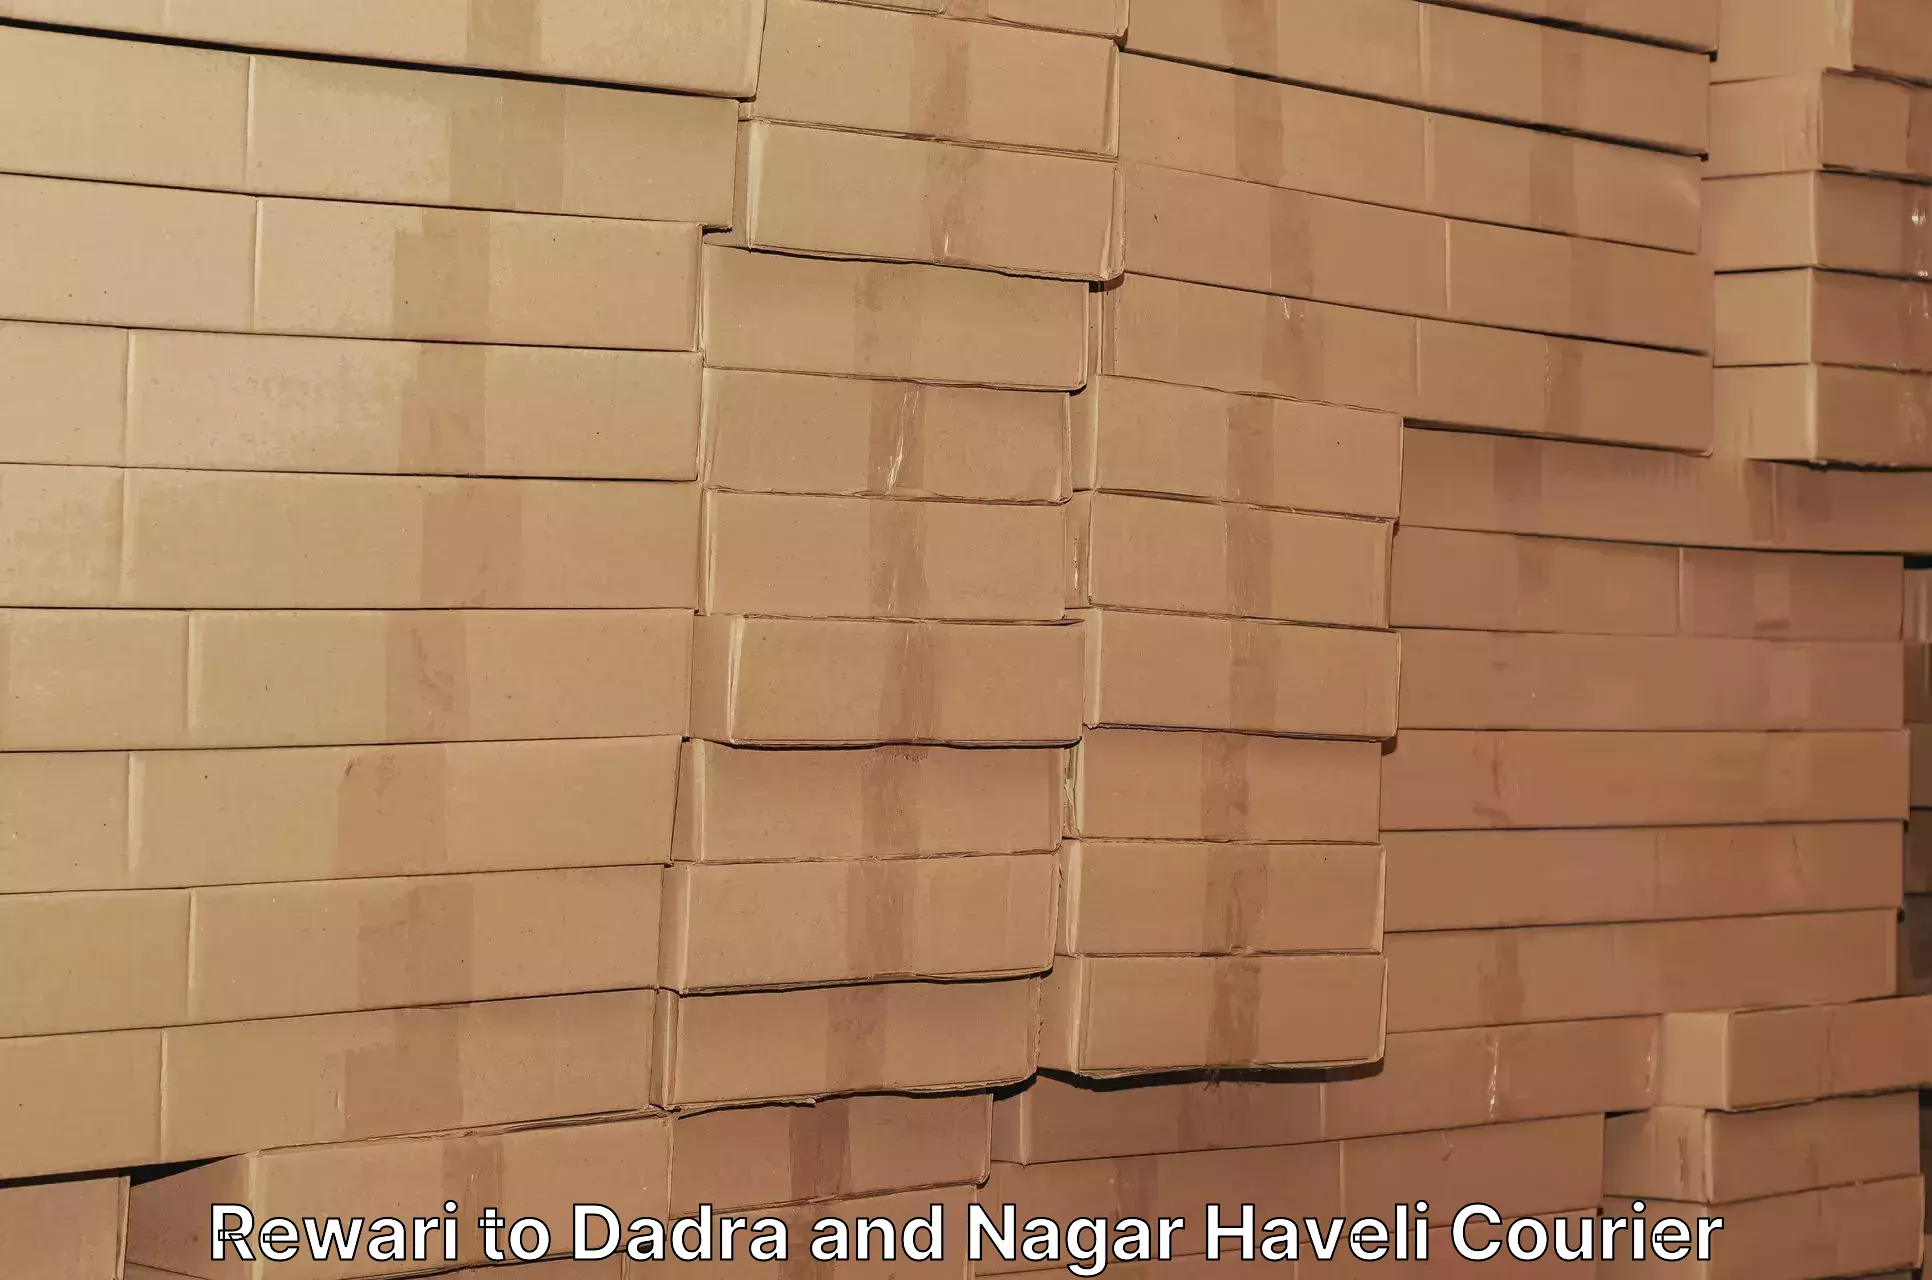 Courier membership Rewari to Dadra and Nagar Haveli